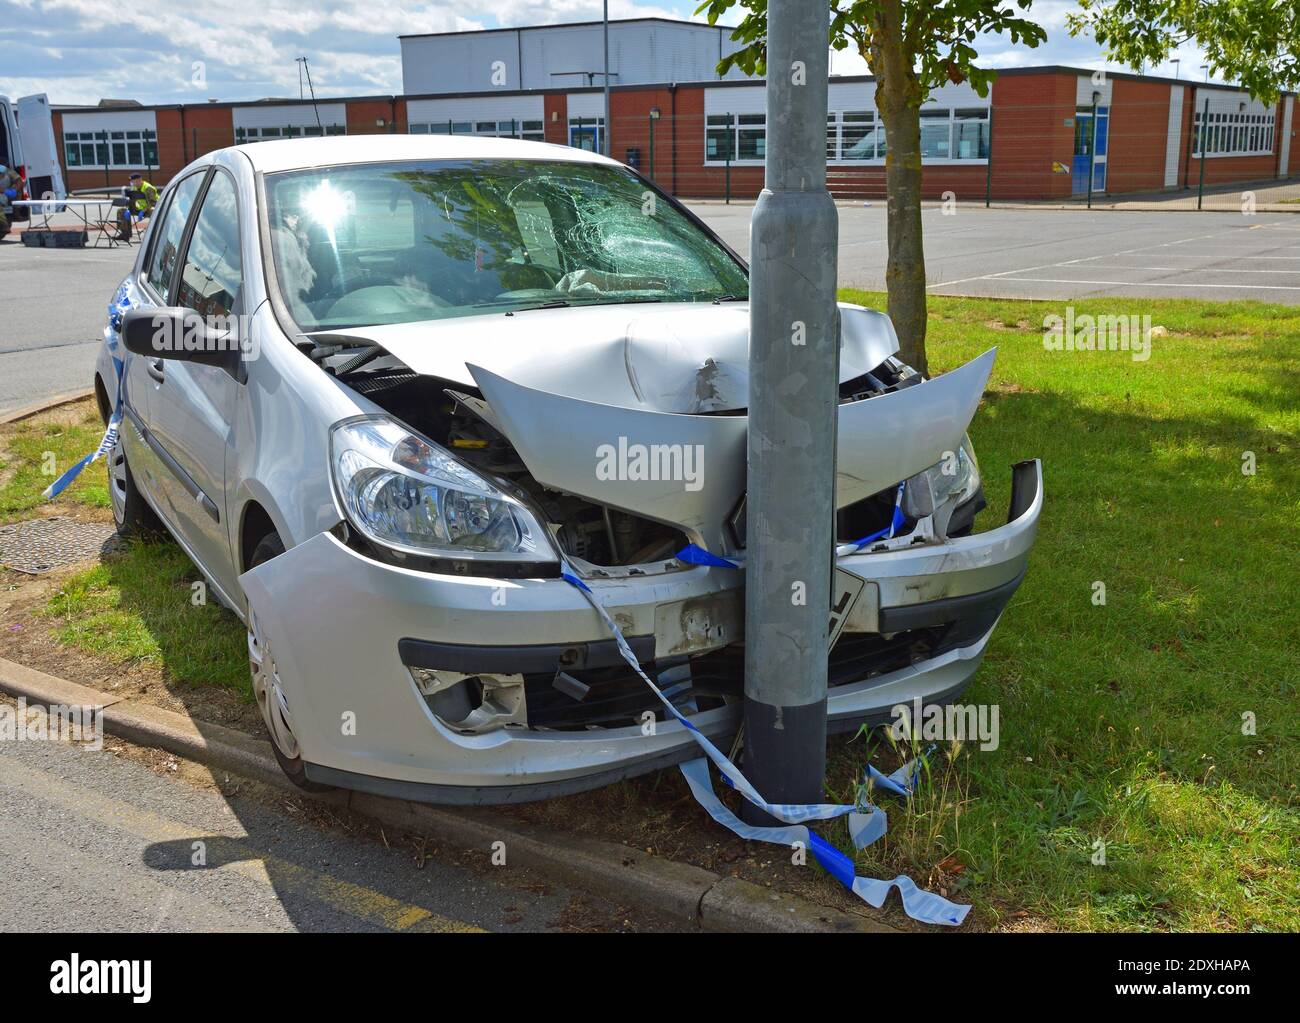 Car crashed into lamp post near car park exit. Stock Photo